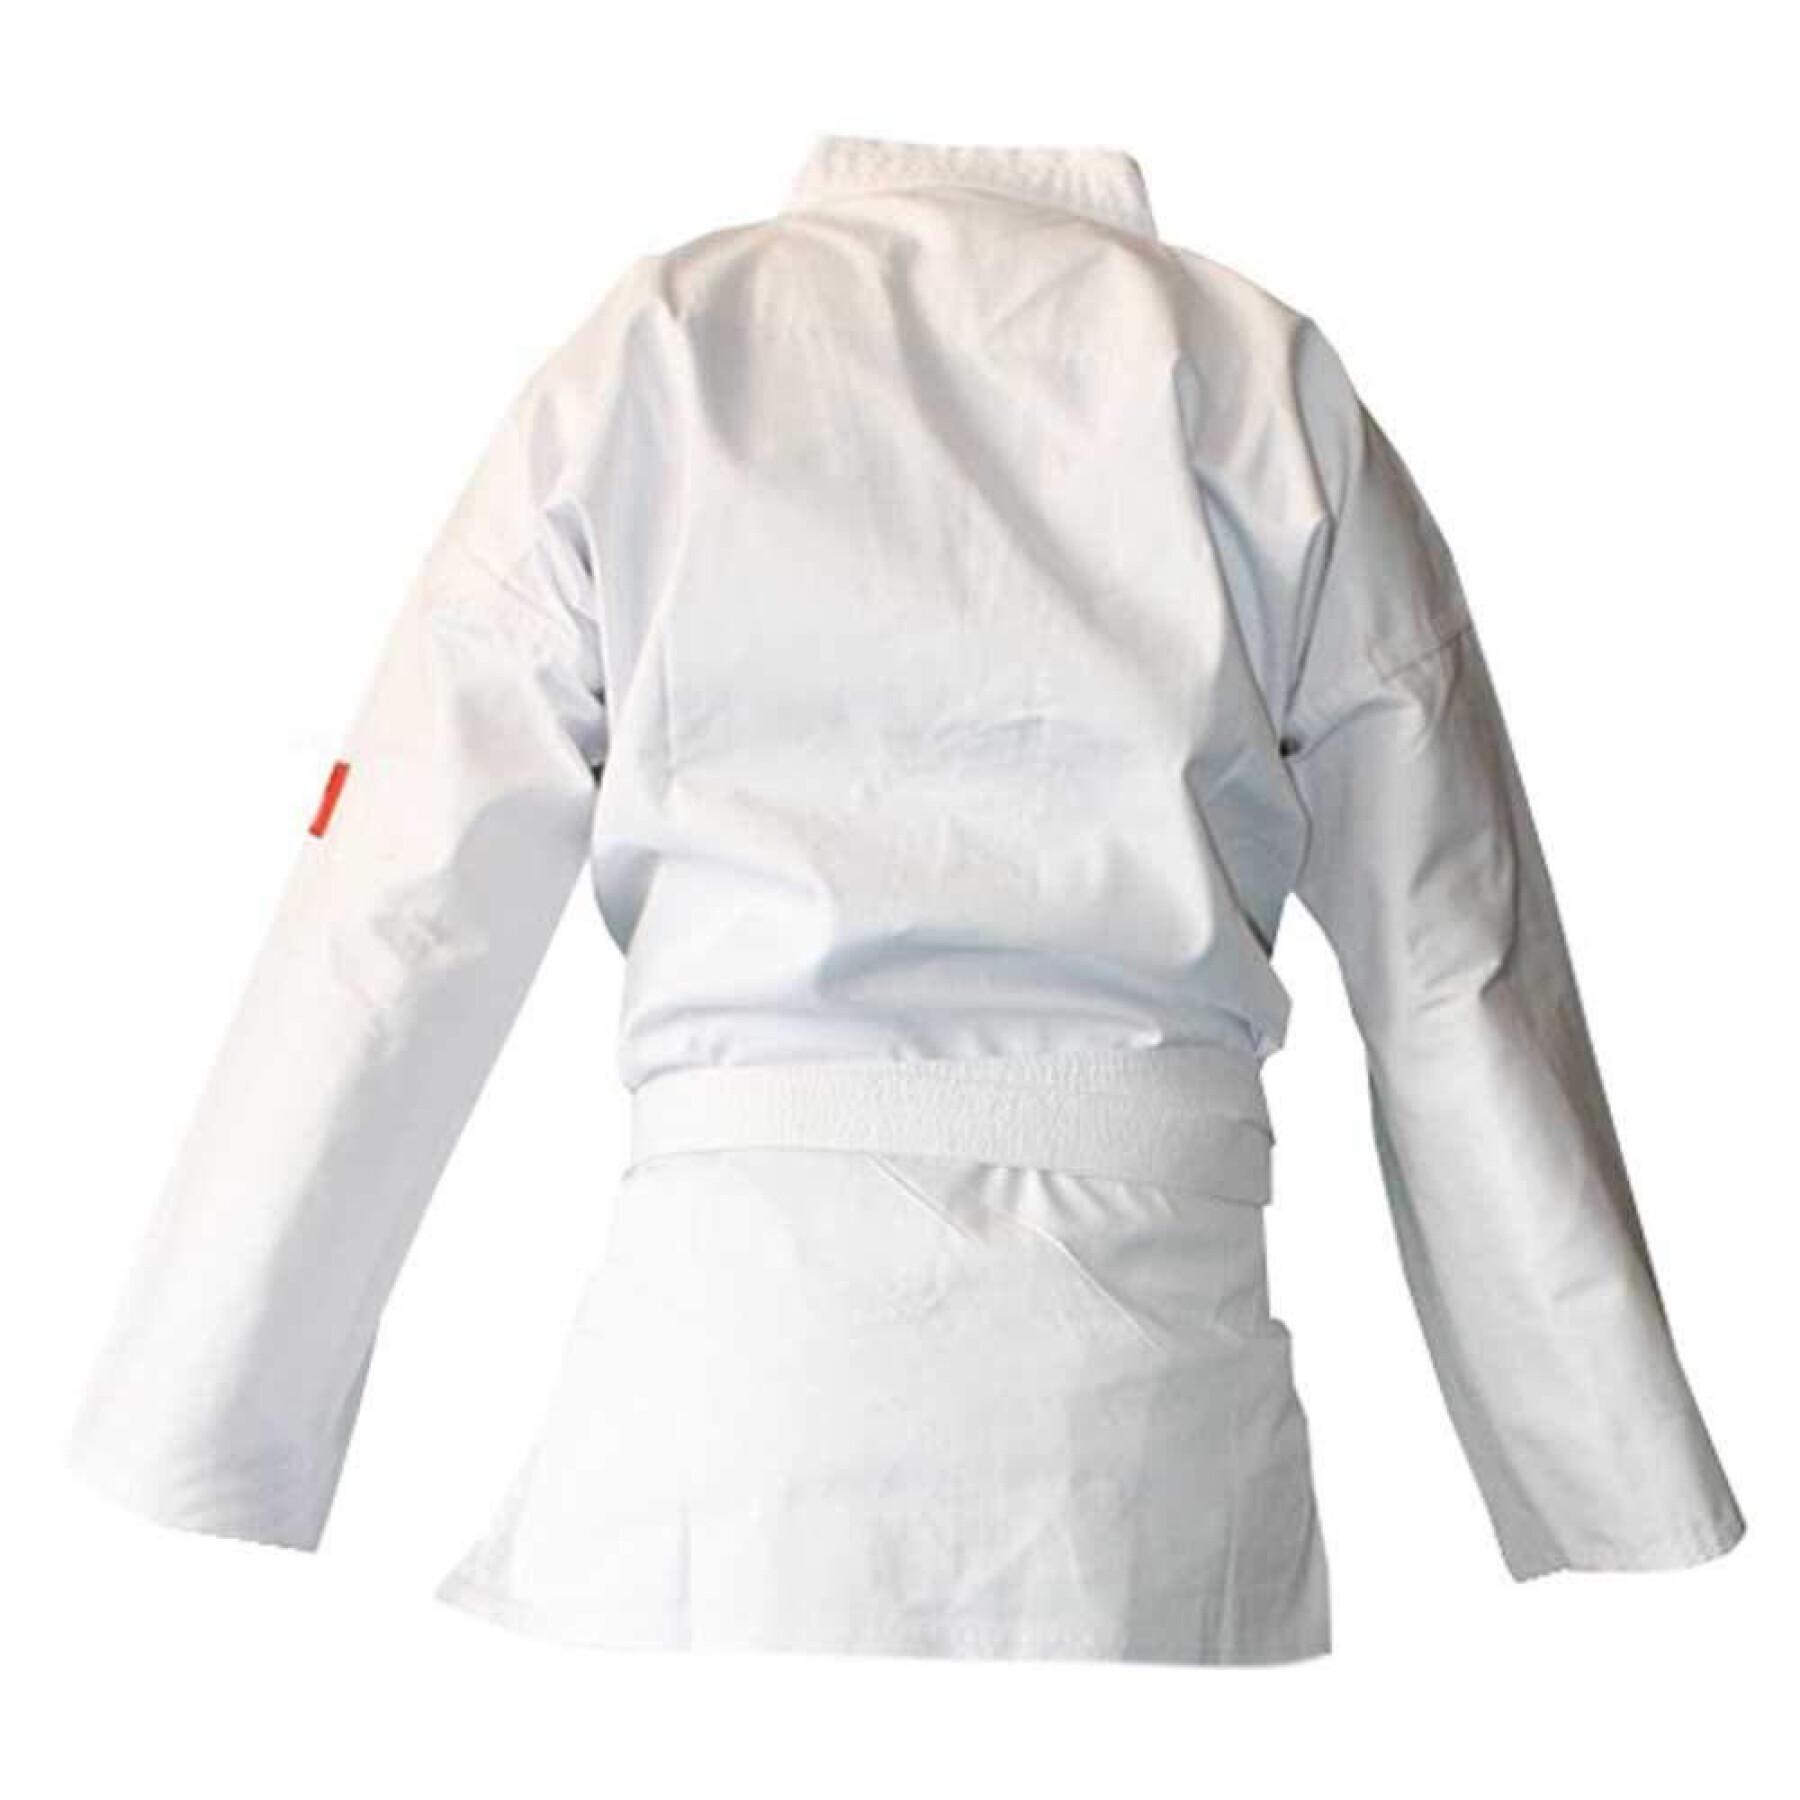 Kimono de kárate con cinturón de algodón blanco Yosihiro